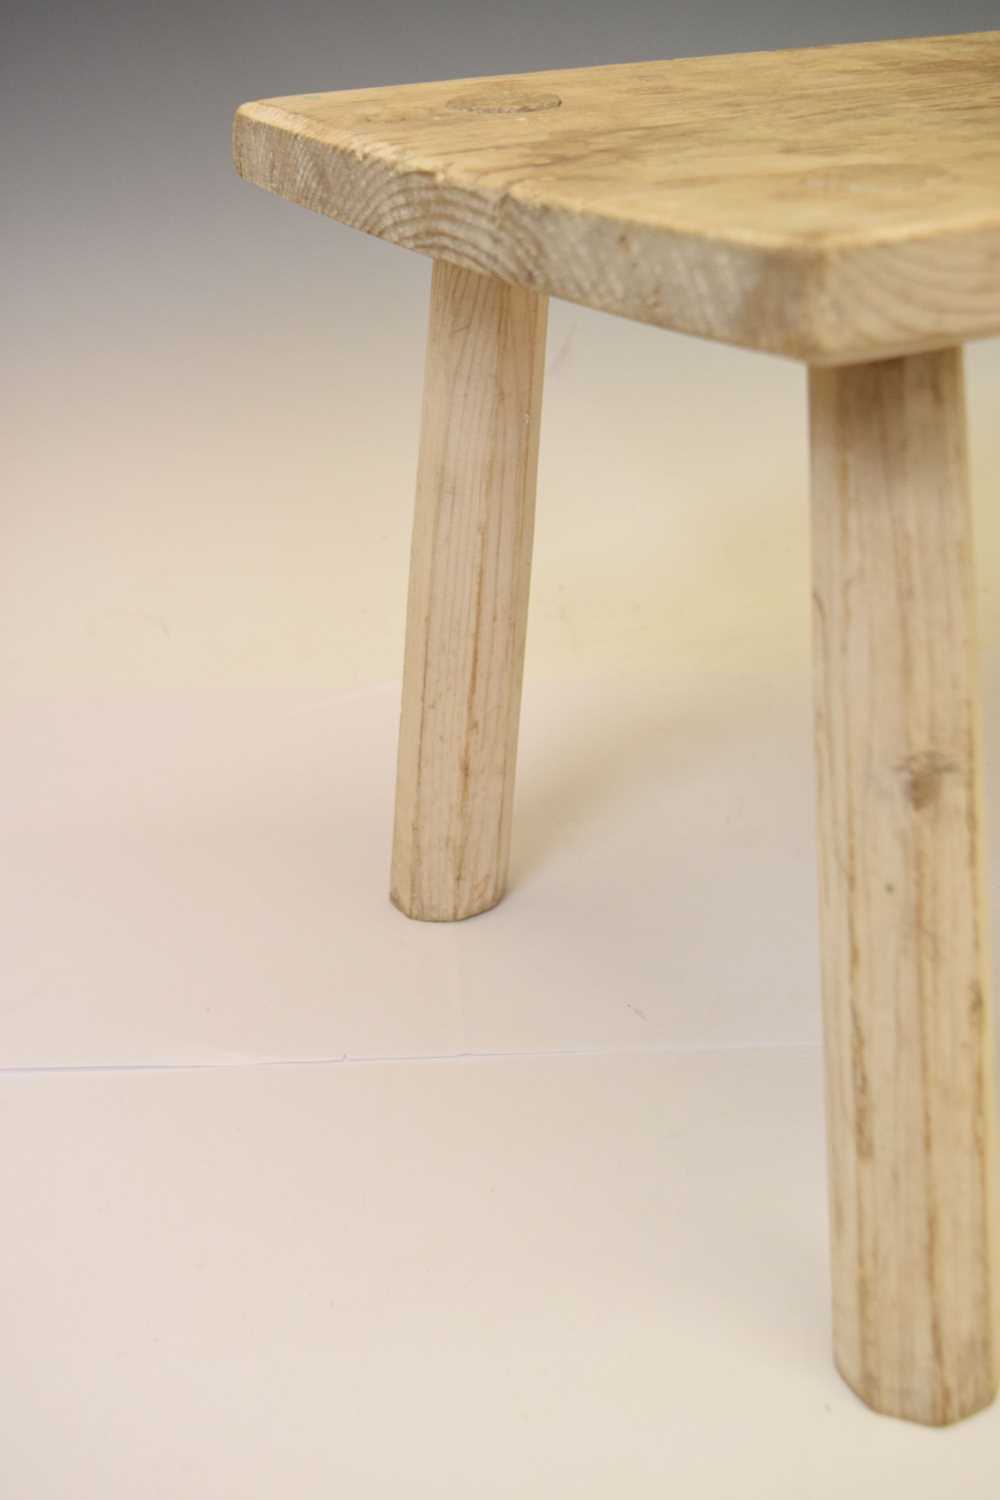 Rustic four-legged pine stool - Image 6 of 6